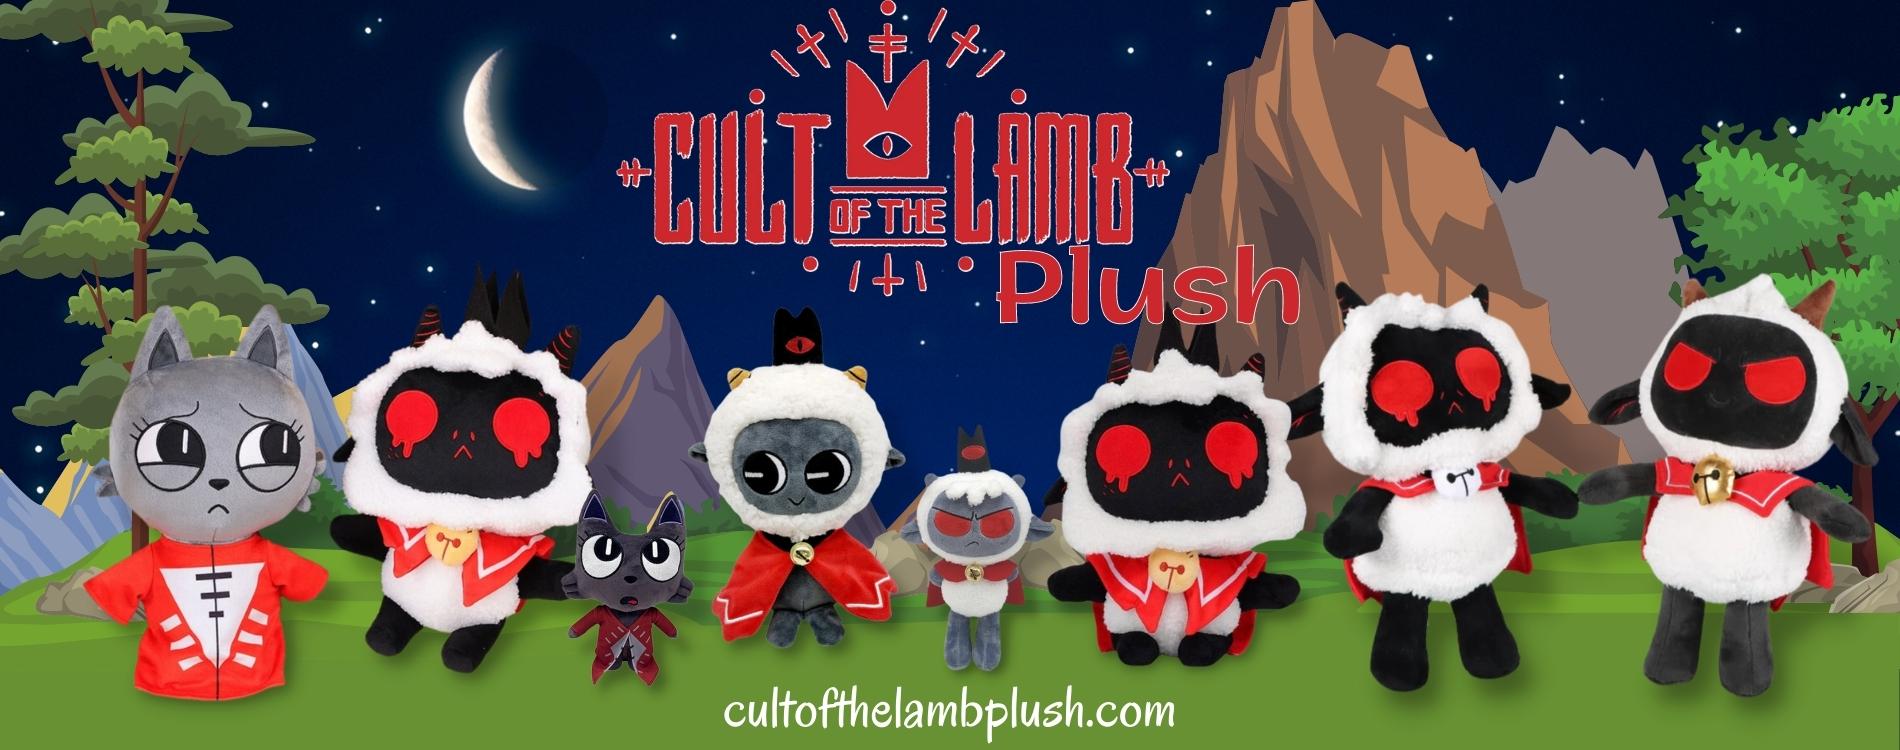 cult of the lamb plush banner